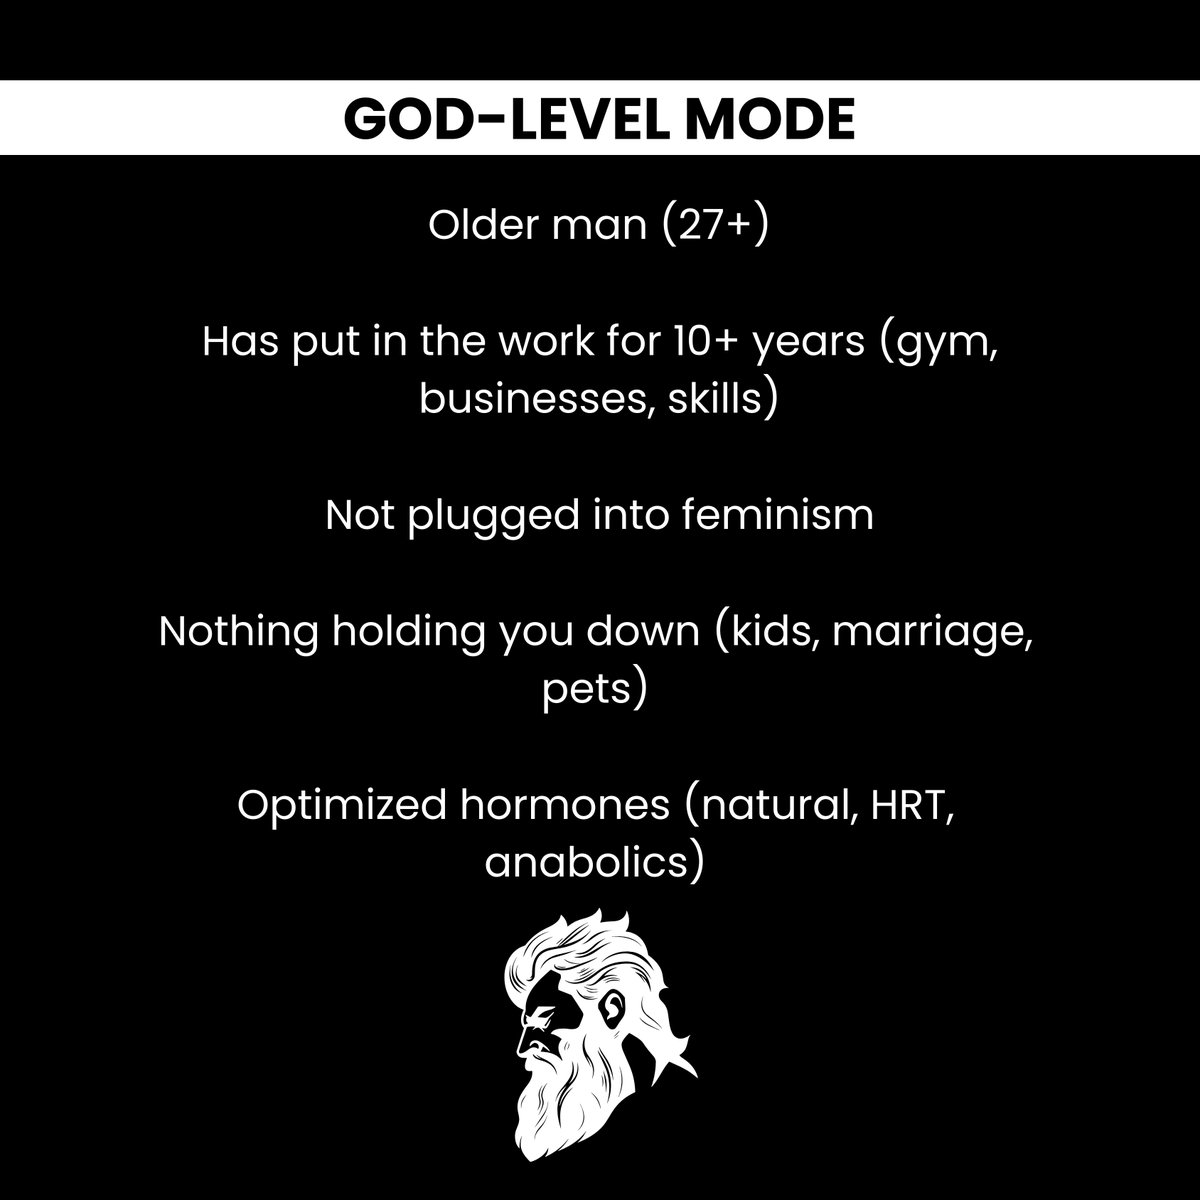 GOD-LEVEL MODE!

#gymmotivation #growyourown #HRT #anabolics #hormones